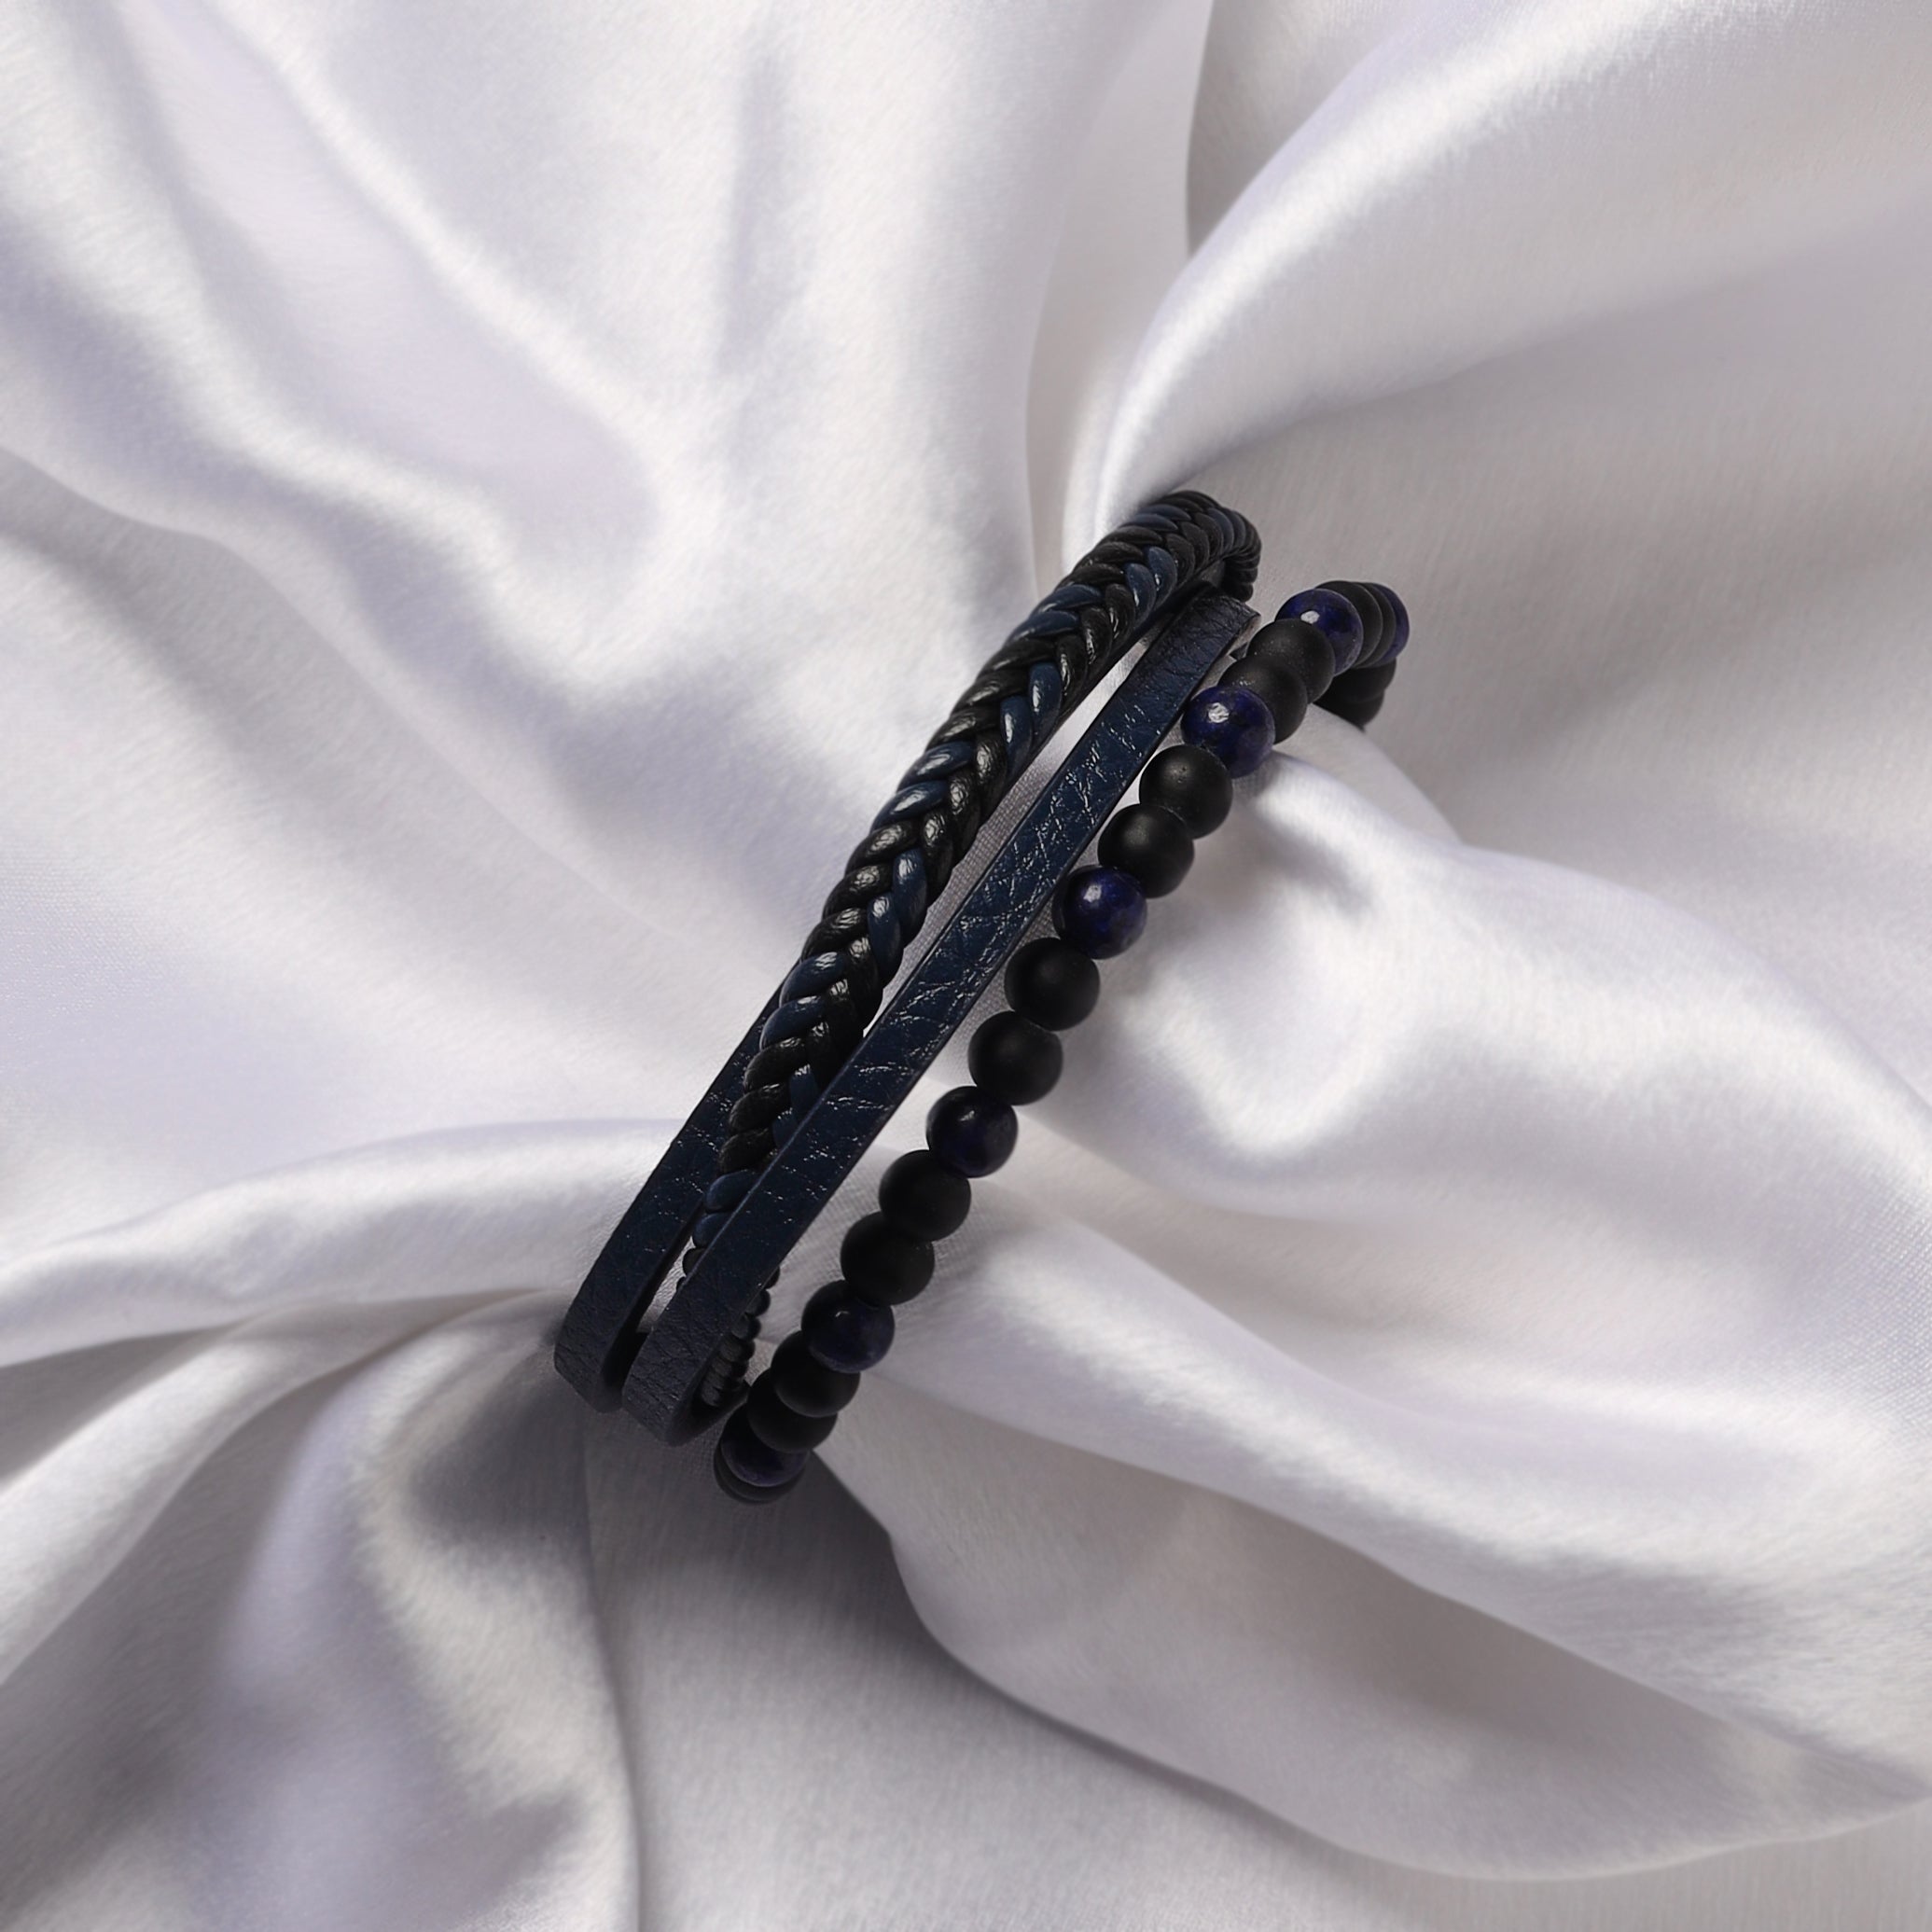 Blue & Black Braided Bracelet